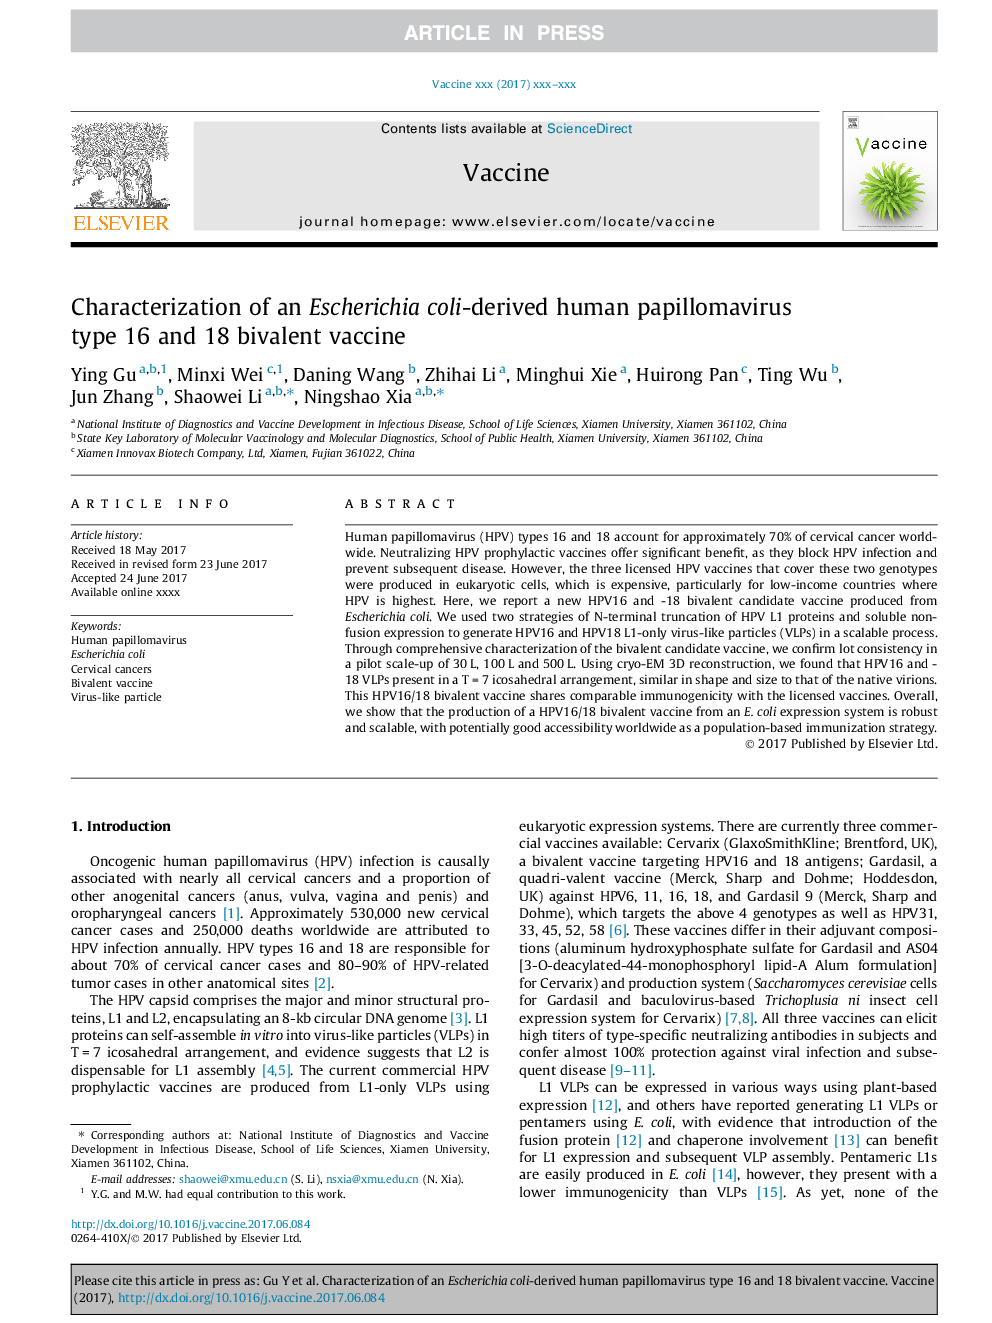 Characterization of an Escherichia coli-derived human papillomavirus type 16 and 18 bivalent vaccine